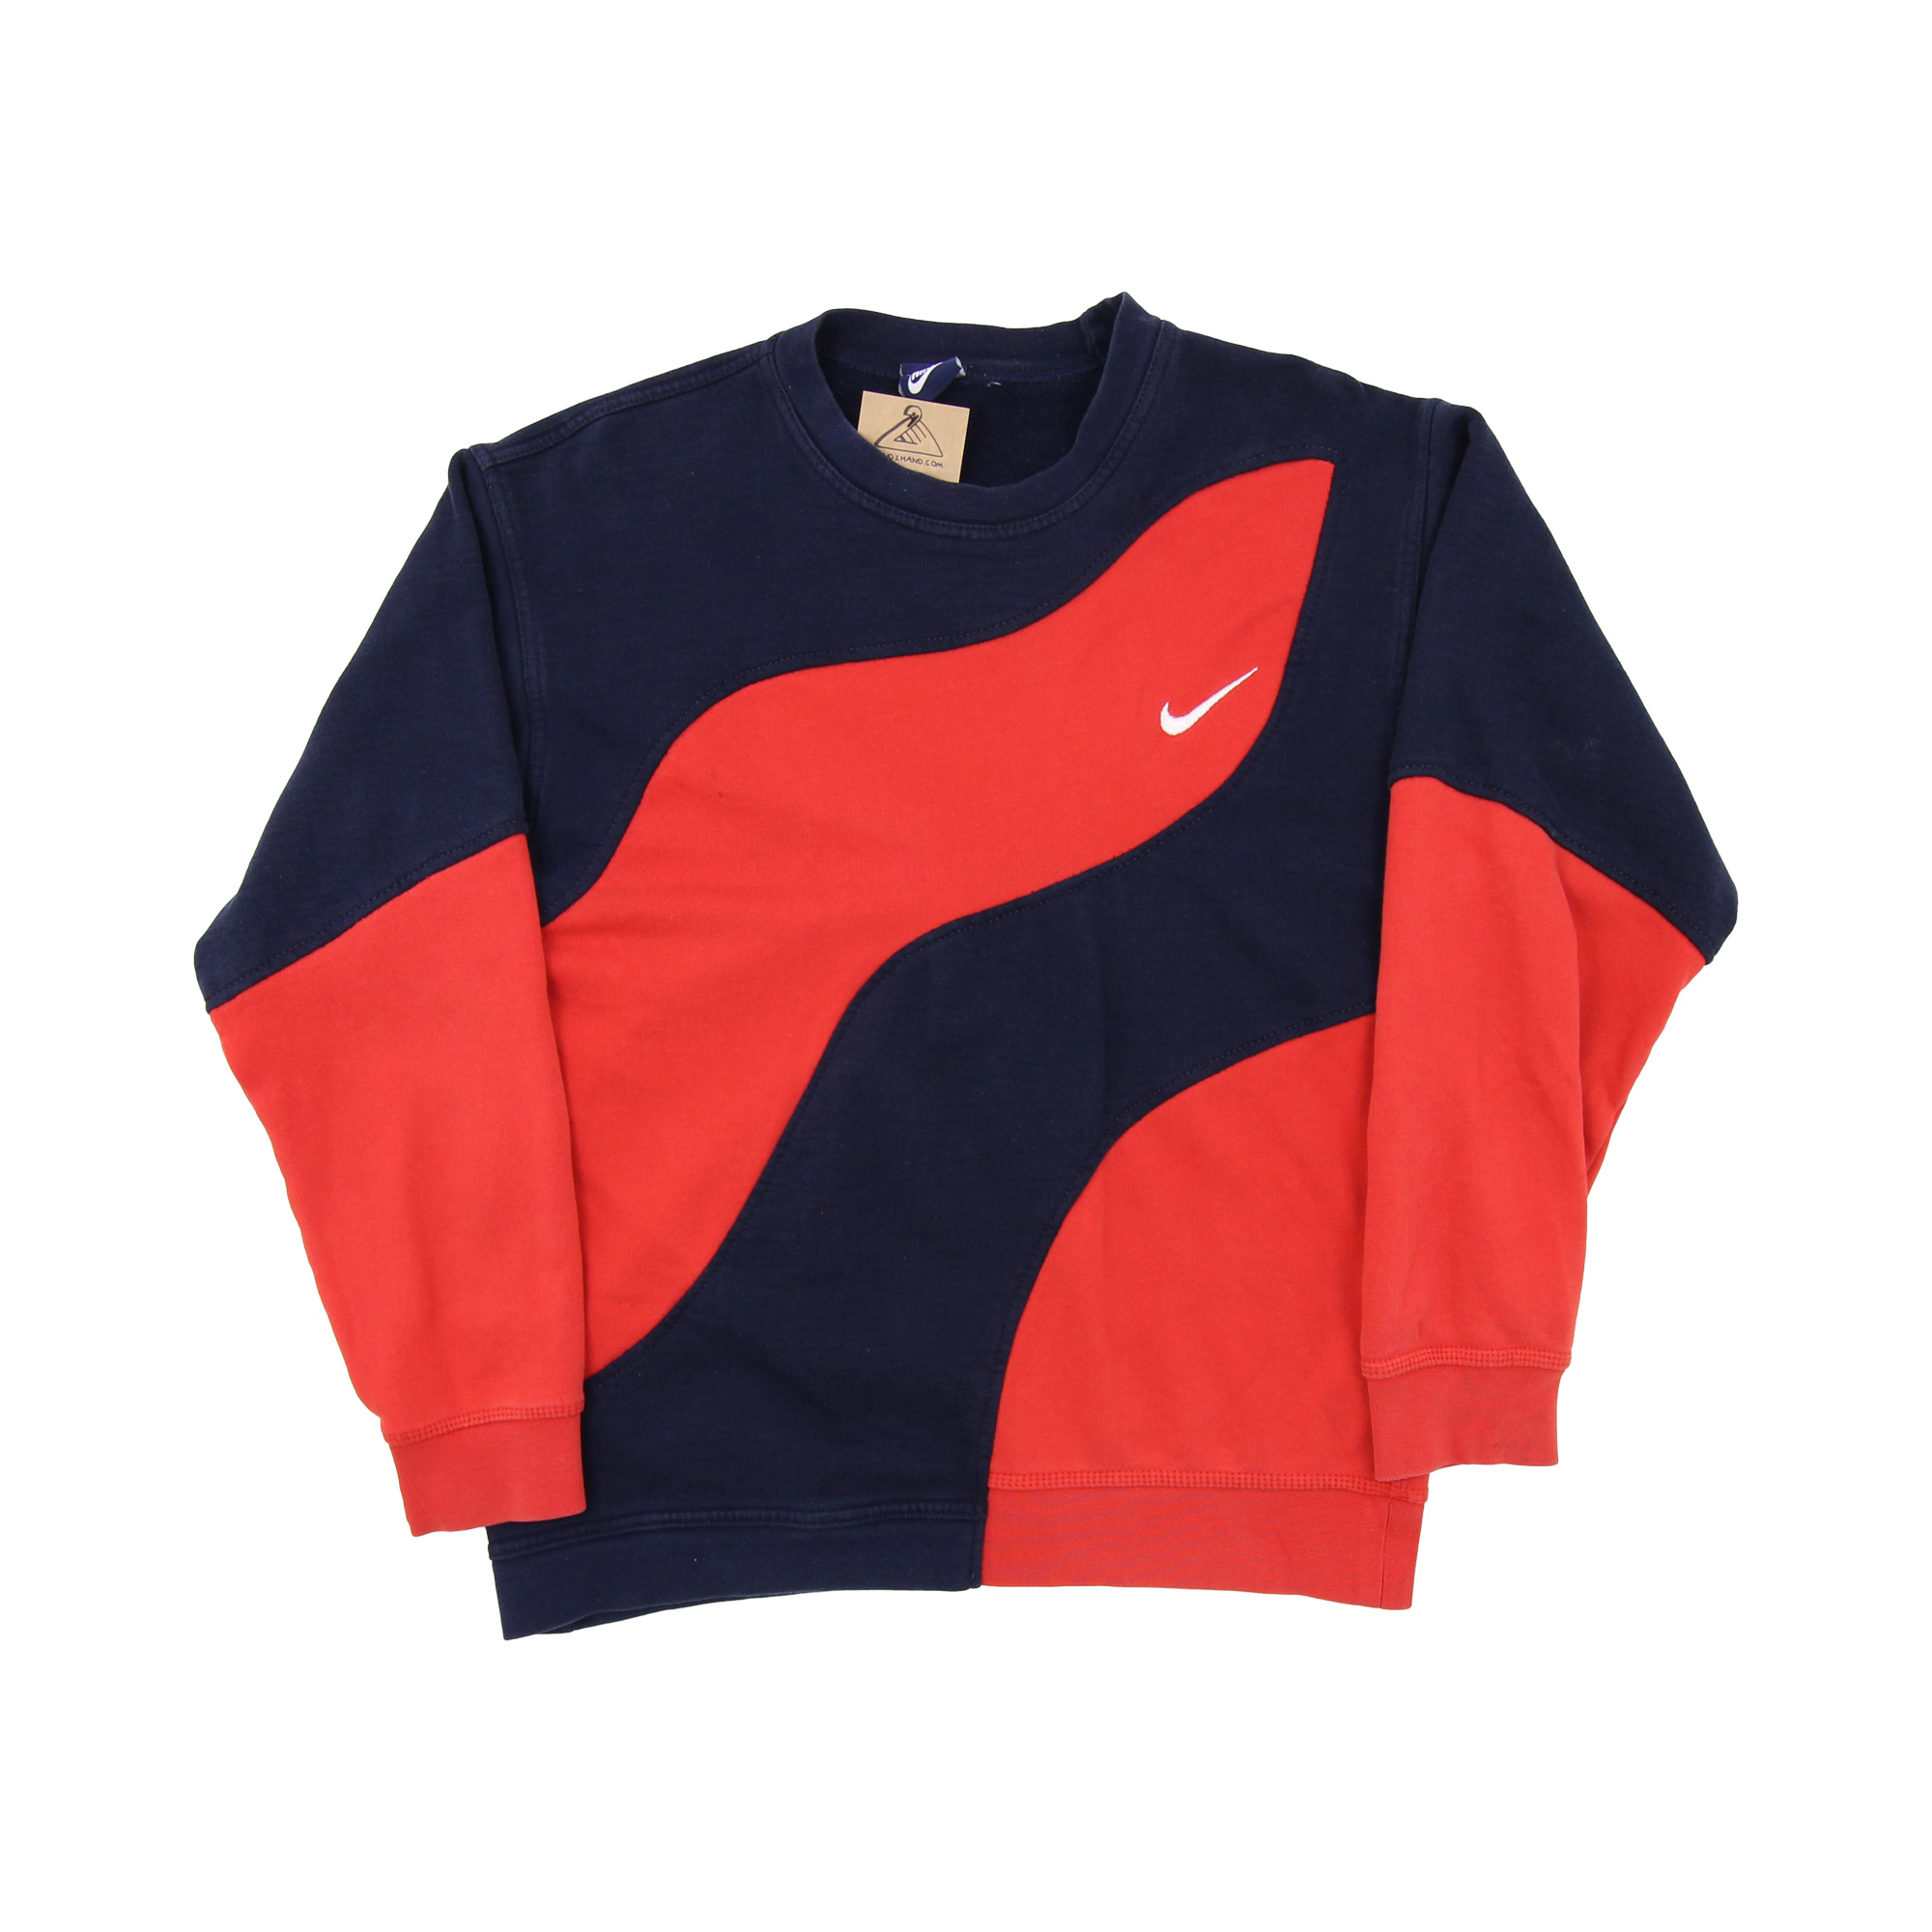 Nike Rework Sweatshirt -  M